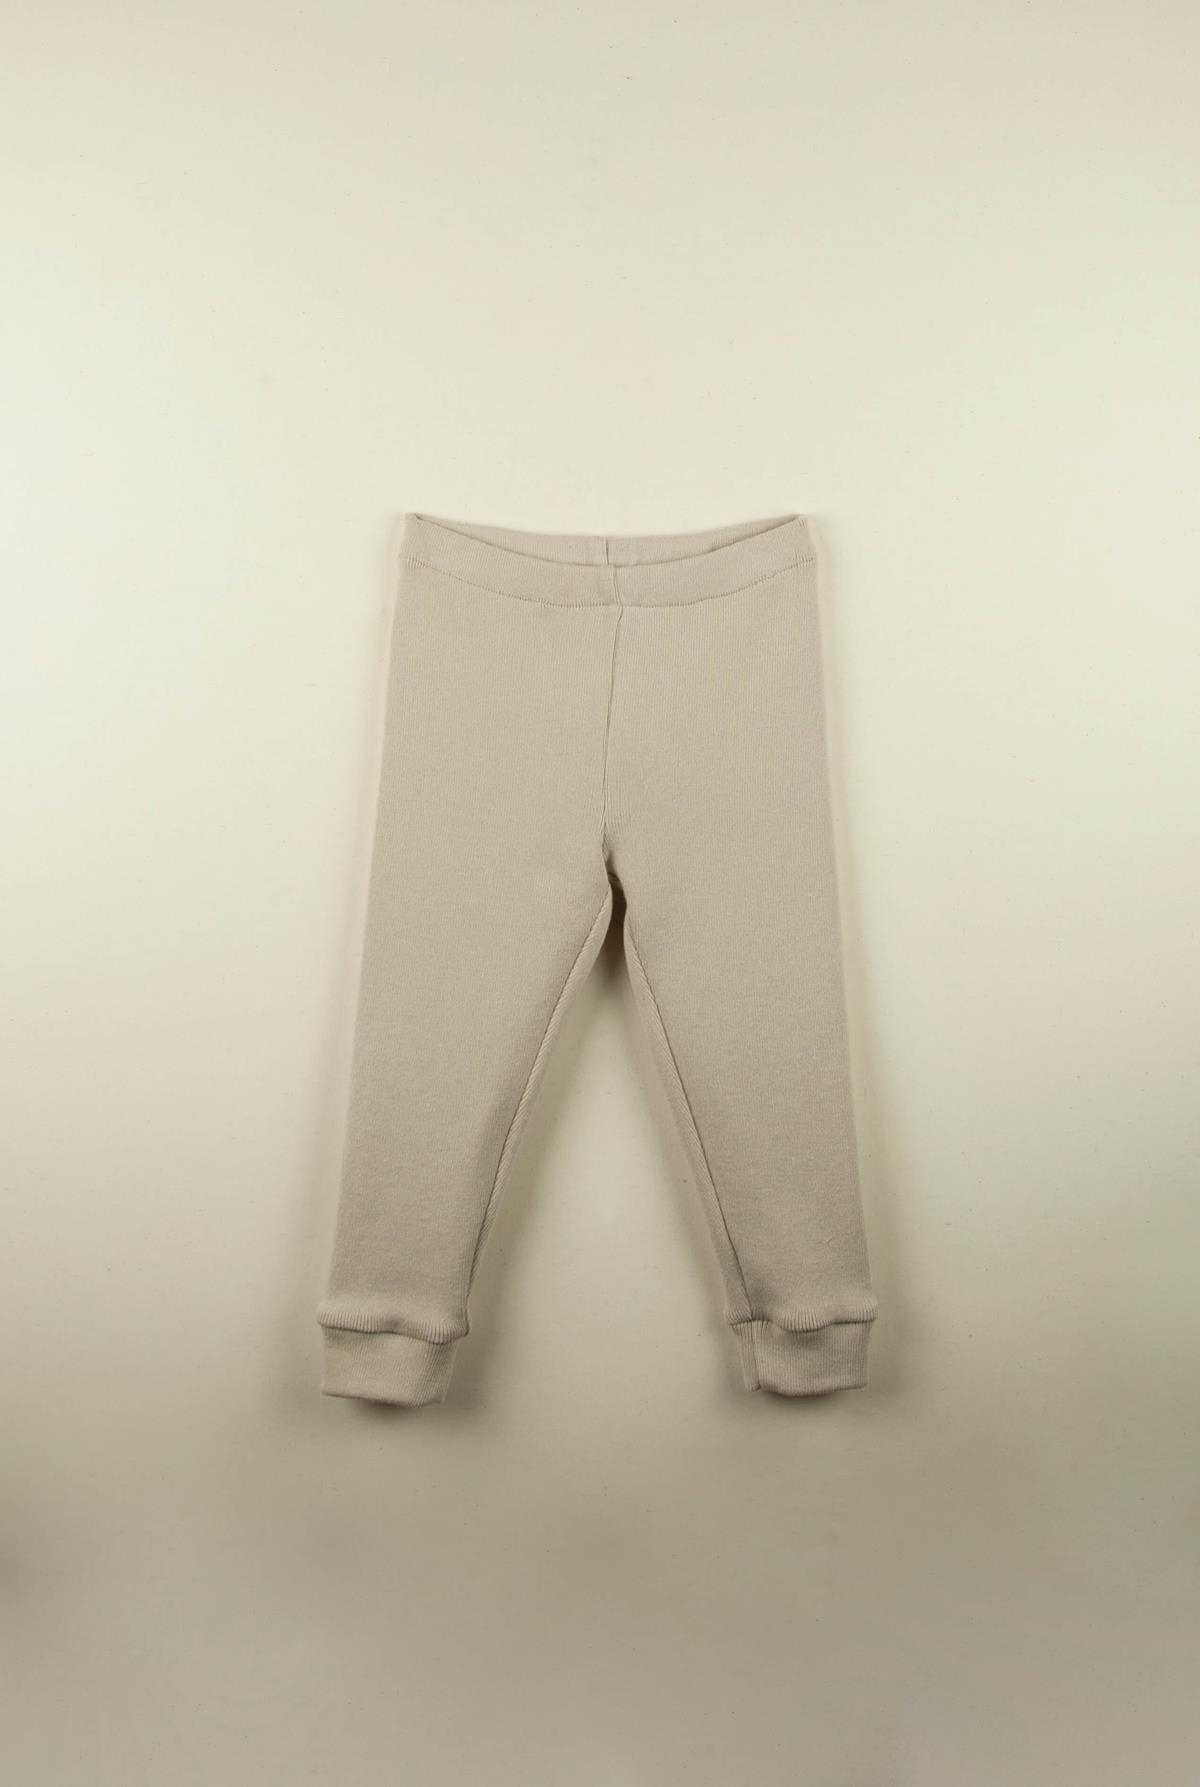 Mod.10.1 Beige cotton leggings | AW21.22 Mod.10.1 Beige cotton leggings | 1